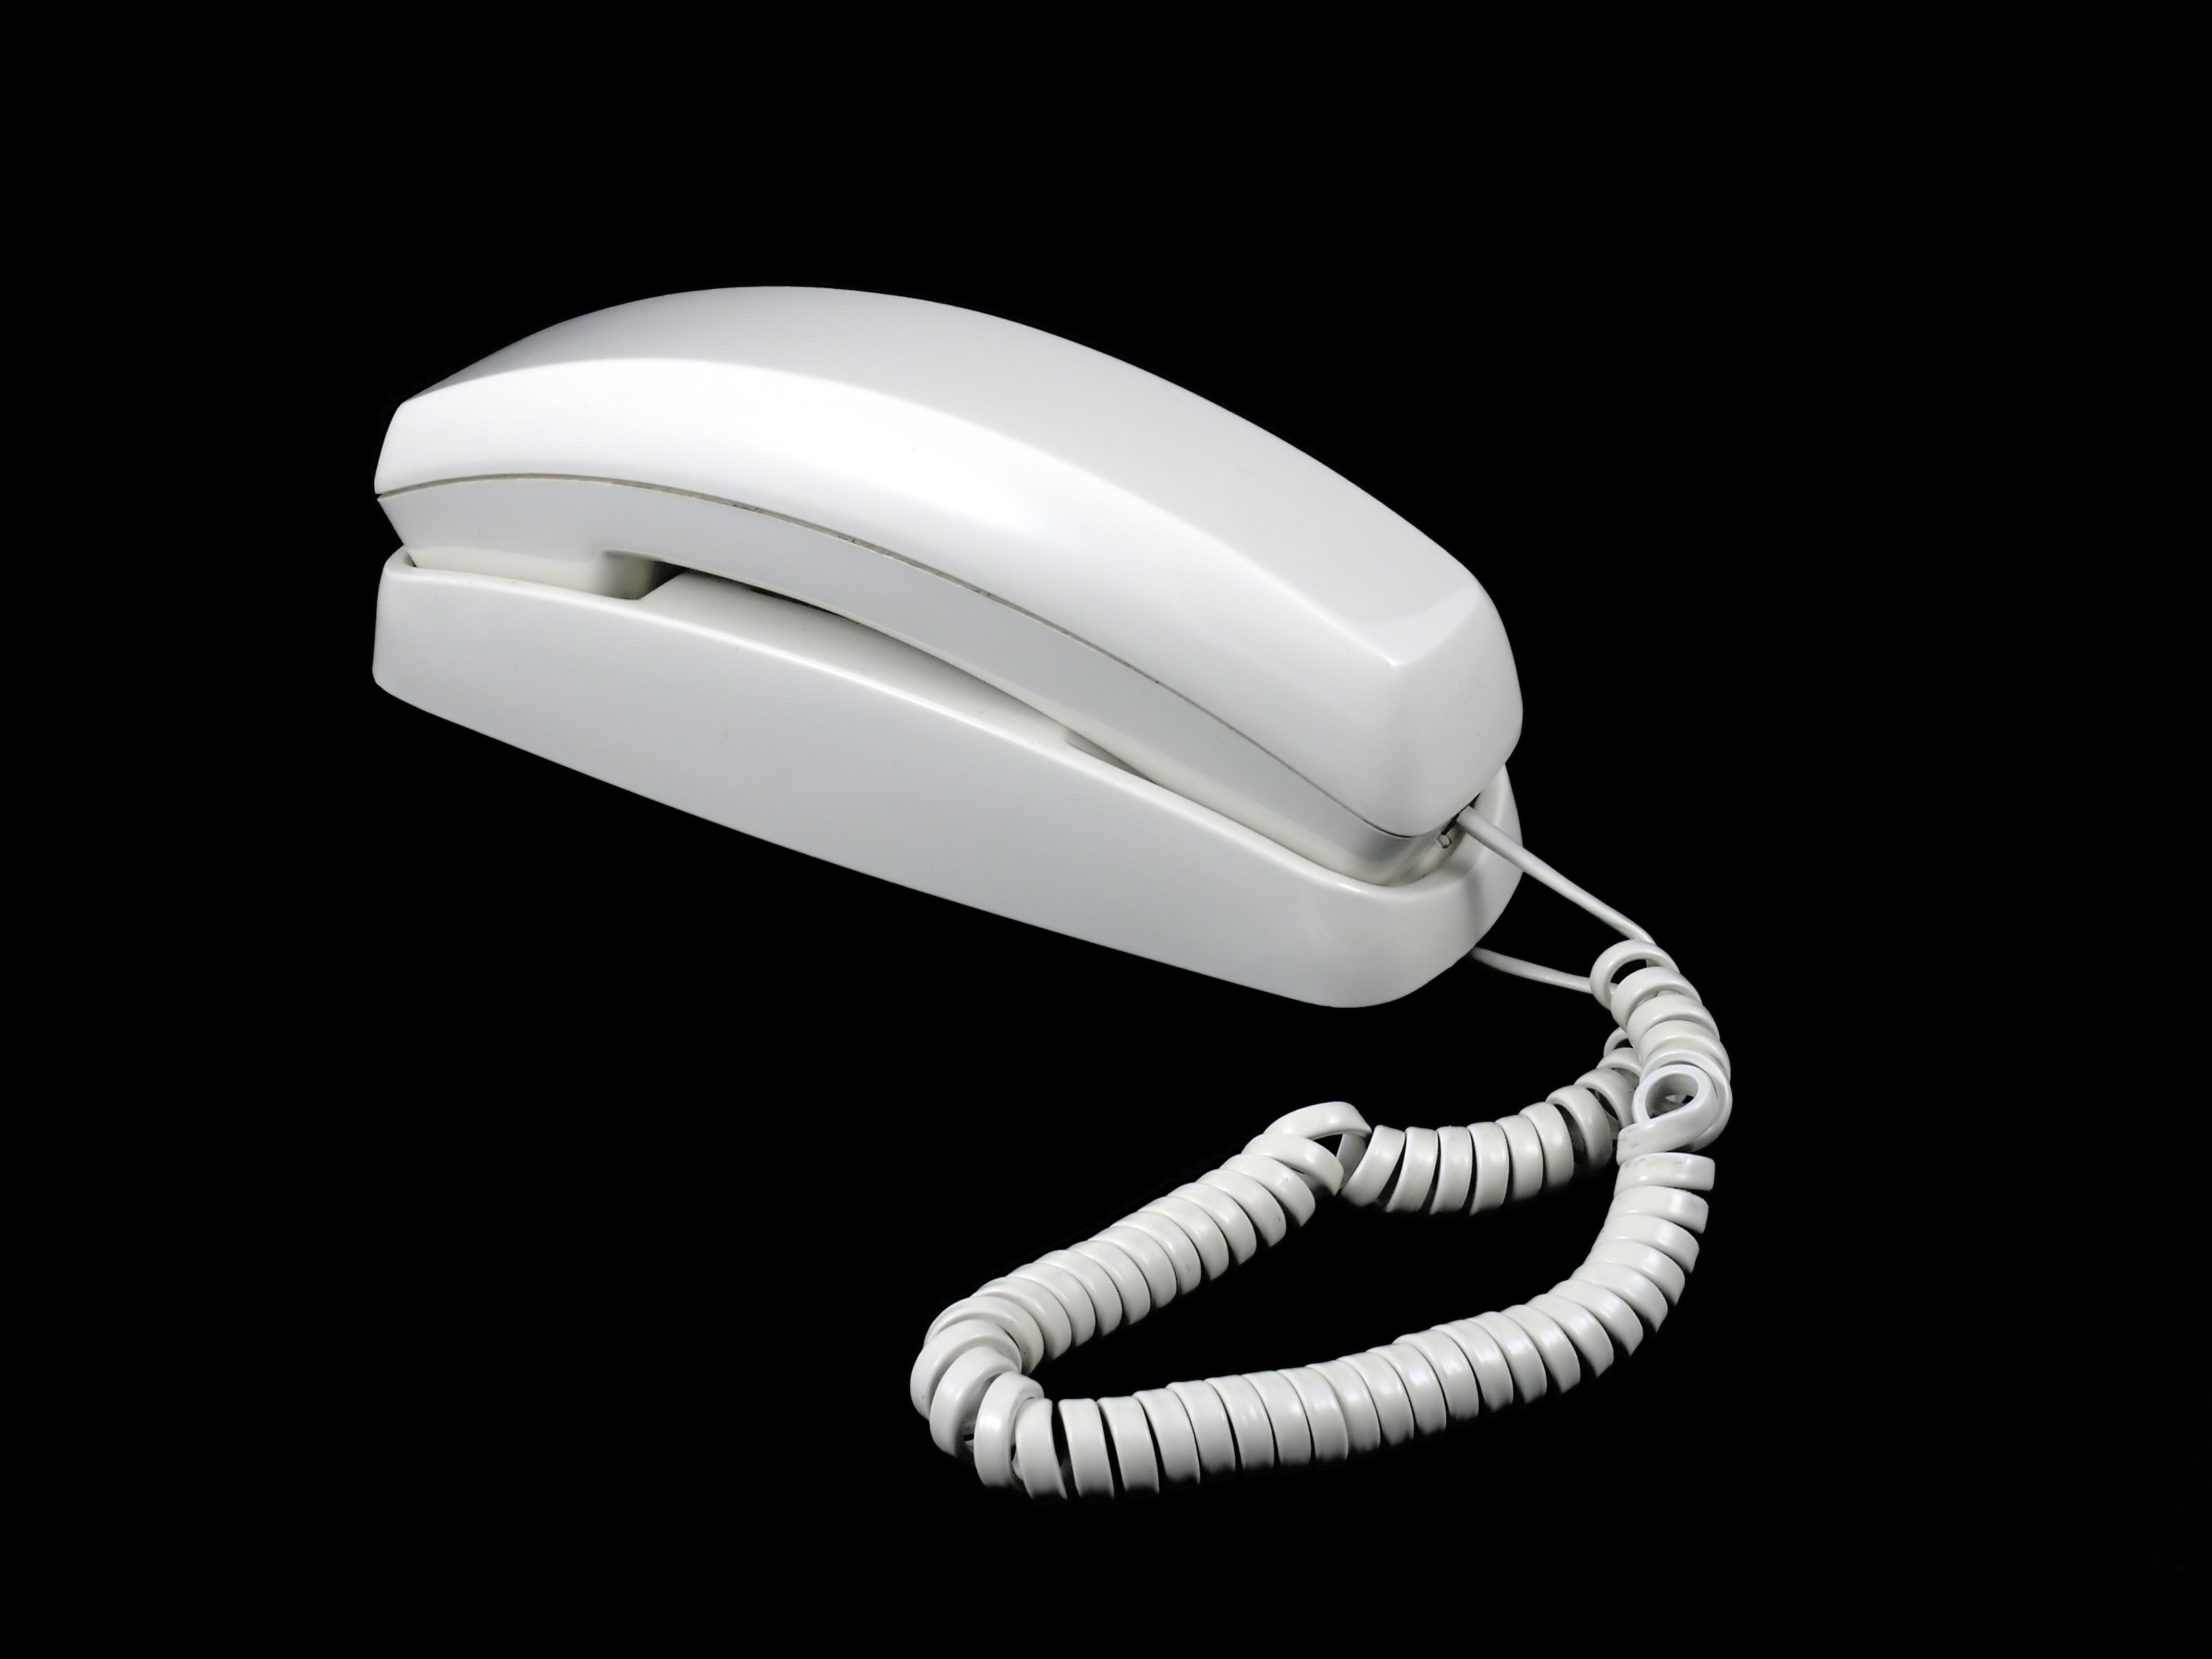 A landline phone